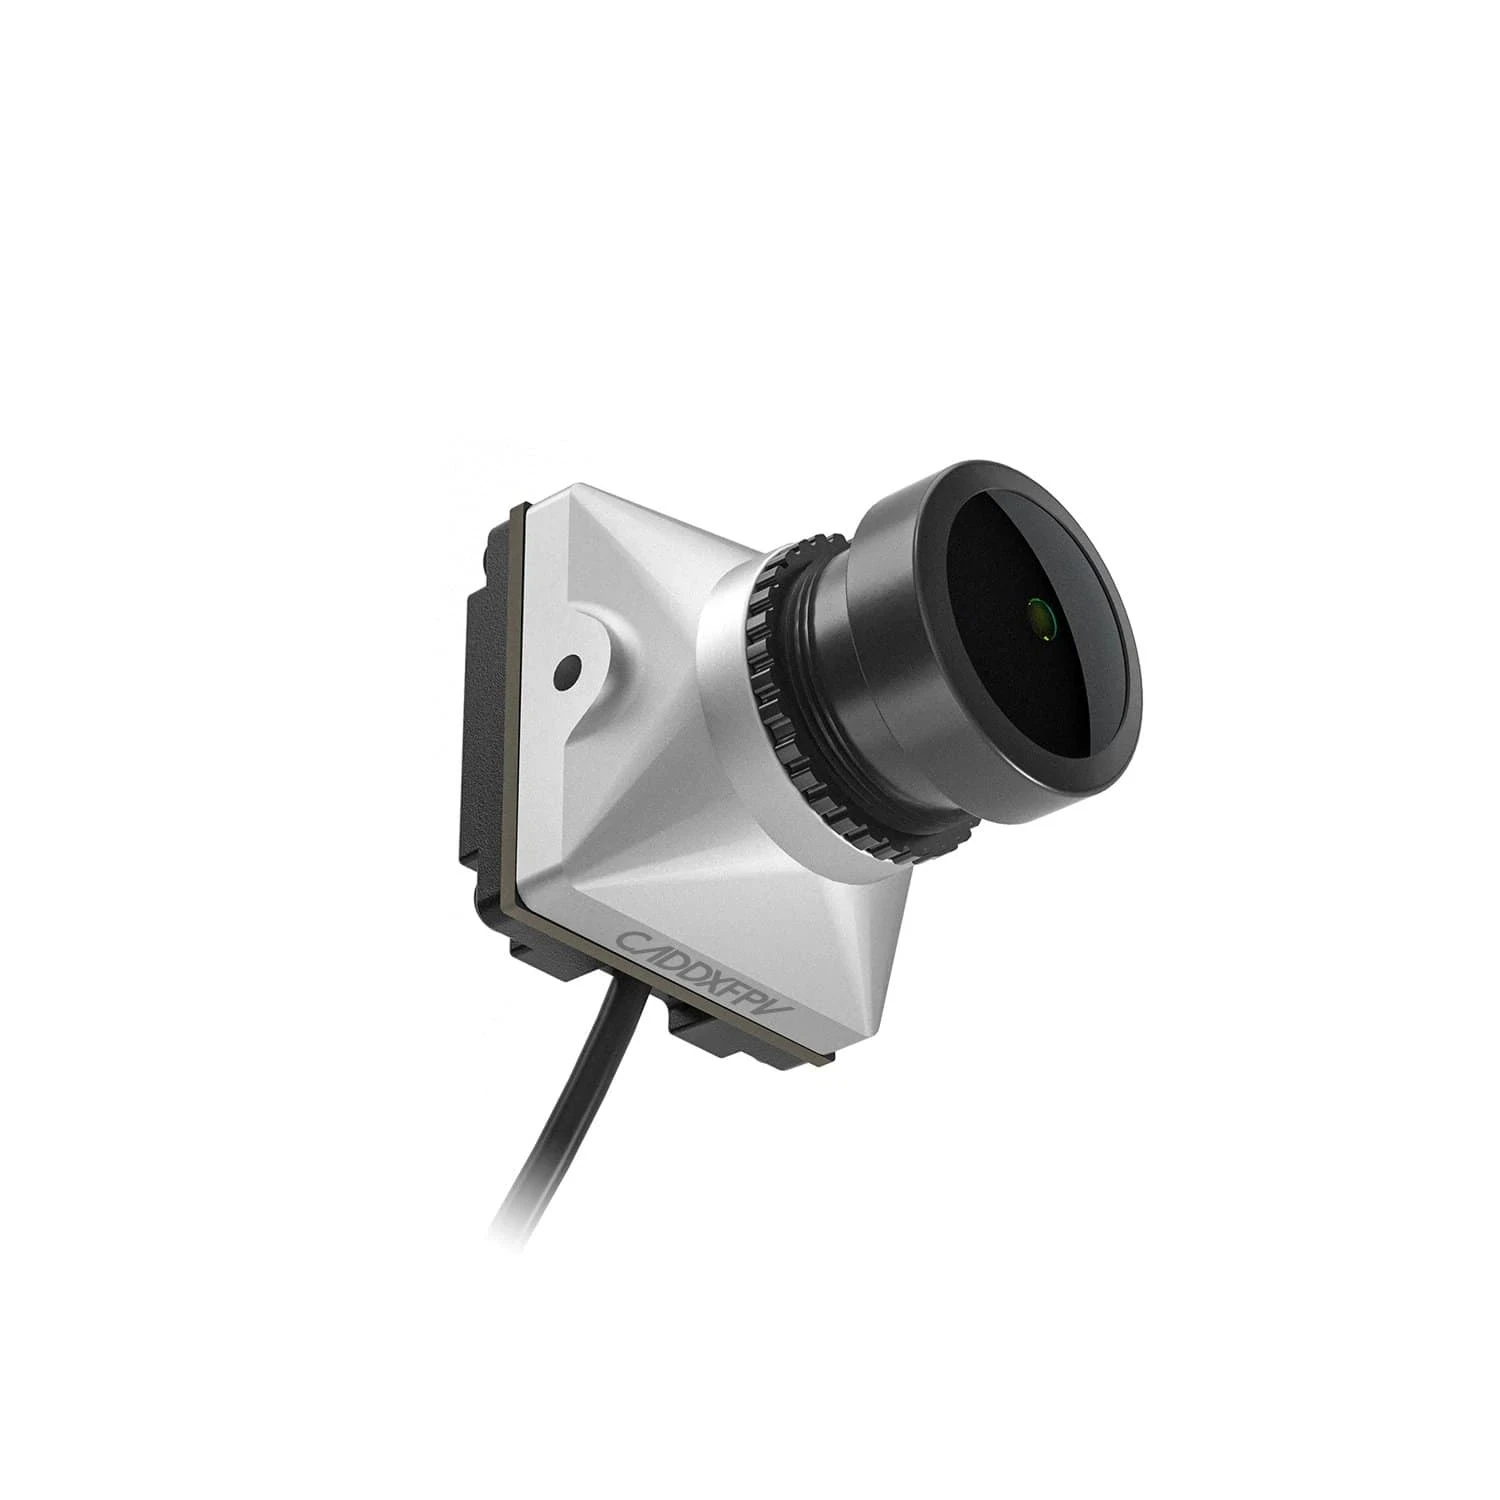 Caddx Polar 1/1.8 inch Starlight Sensor Digital HD FPV Camera 1/1.8 inch 720p/32ms for FPV RC Drone Accessoires enlarge